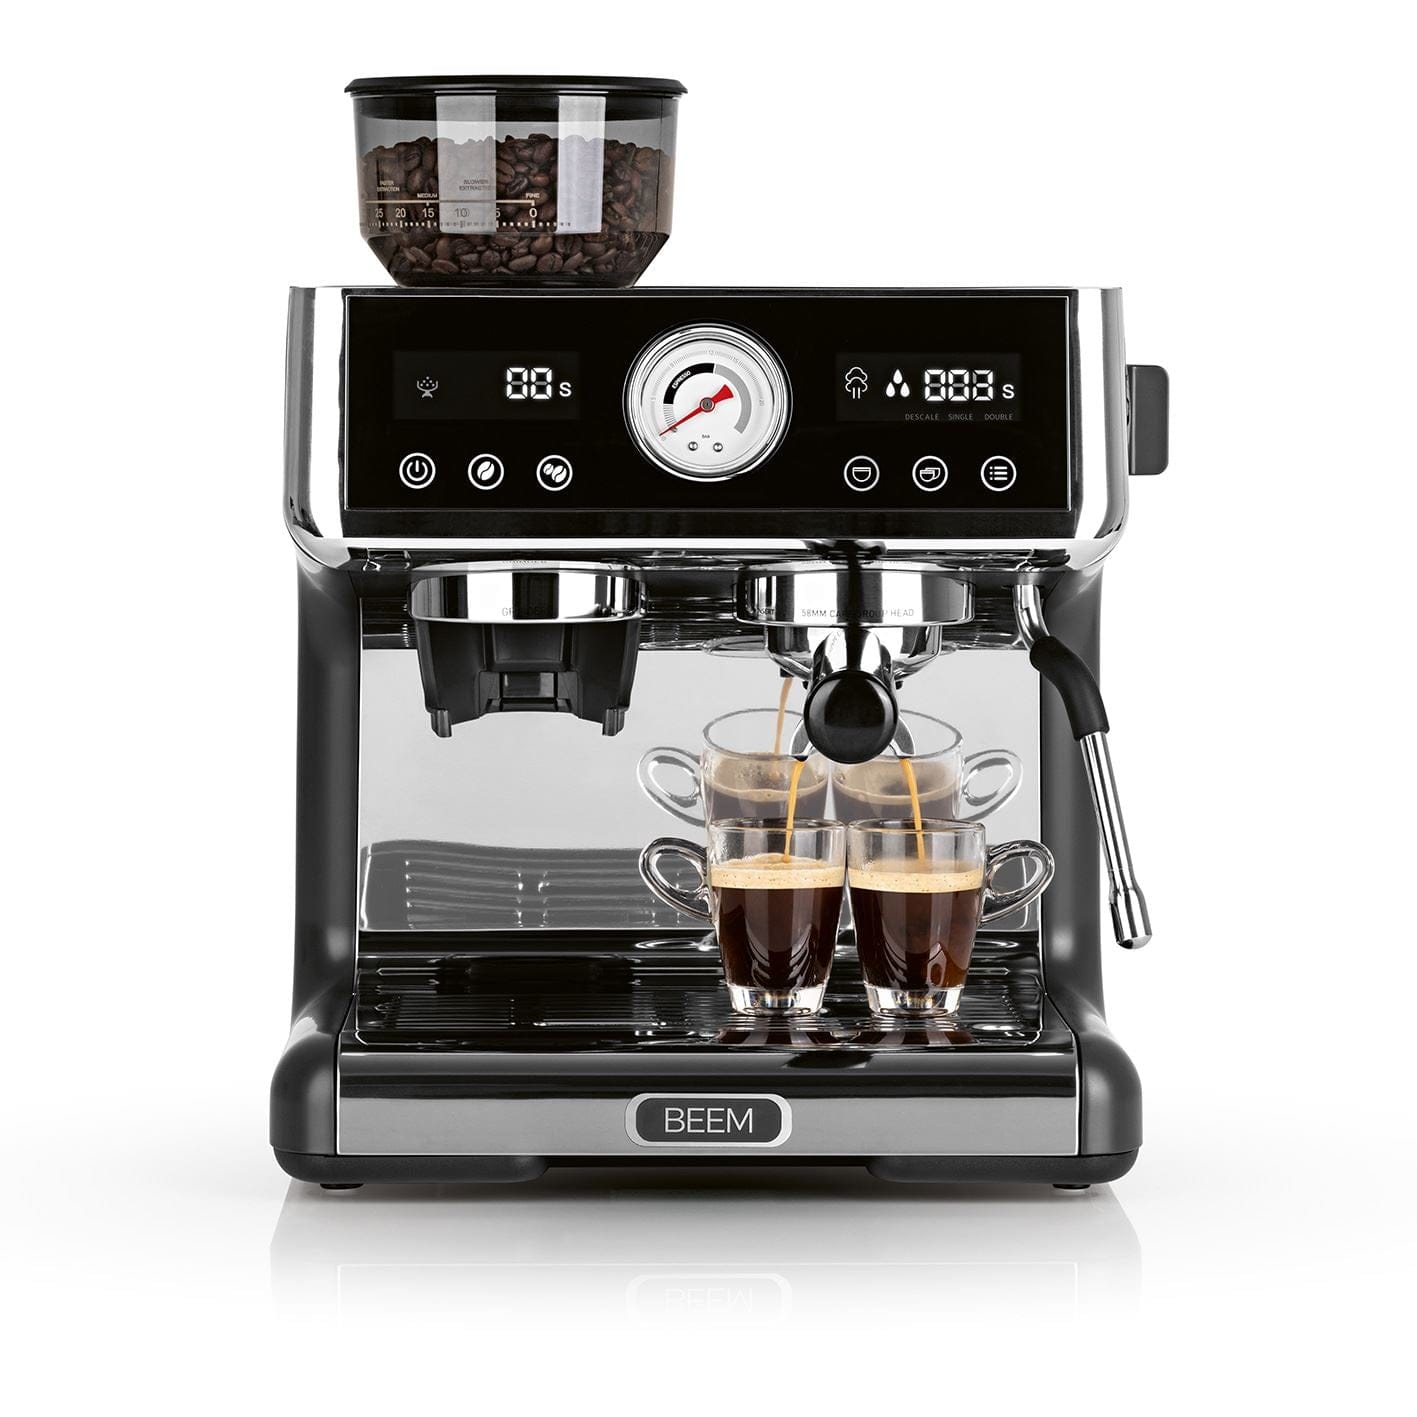 BEEM ESPRESSO-GRIND-EXPERT Digital Espresso Coffee Machine with Grinder - 15 bar